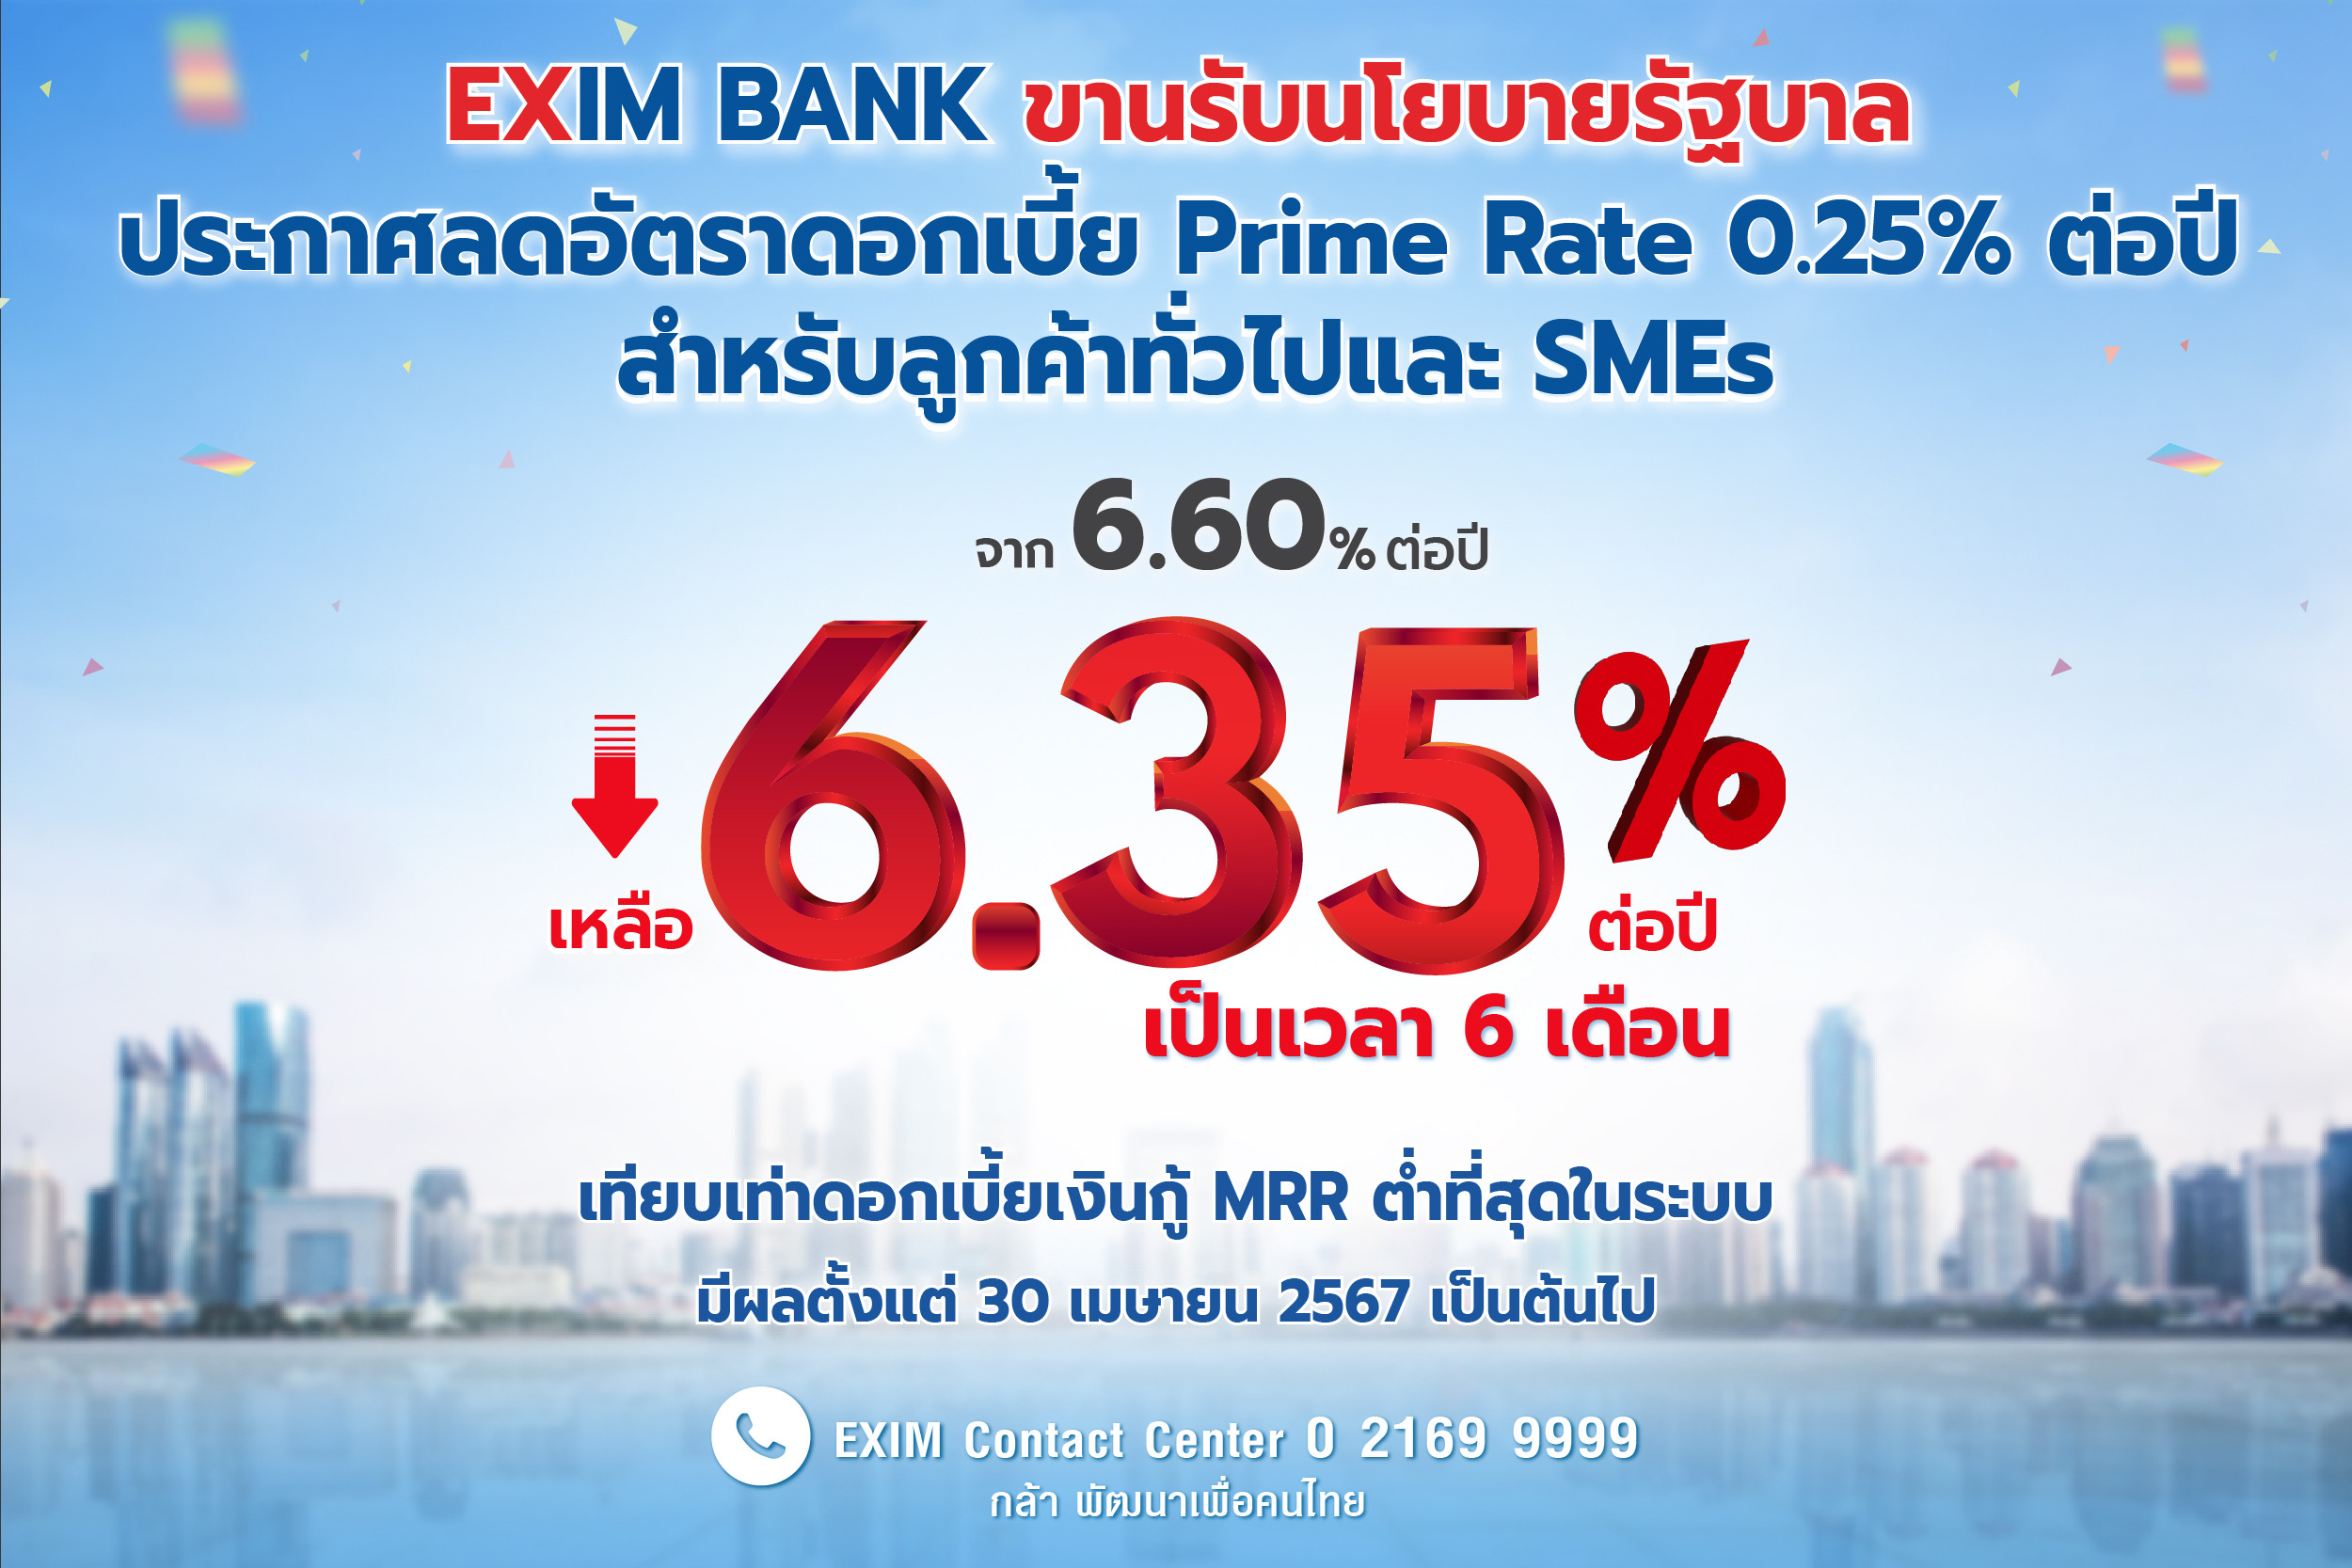 EXIM BANK ขานรับนโยบายรัฐลดดอกเบี้ย Prime Rate 6.35% ต่อปีถึง 6 เดือน